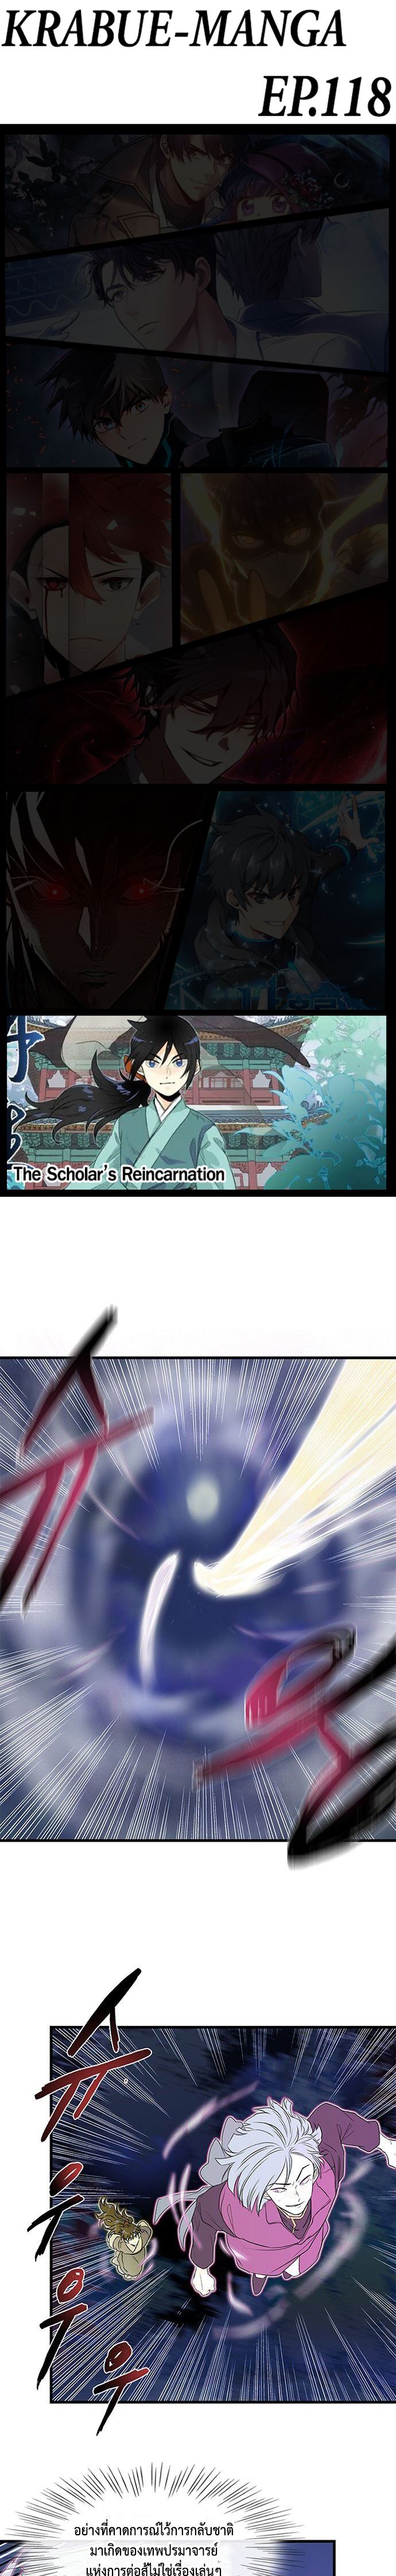 The Scholar’s Reincarnation118 01